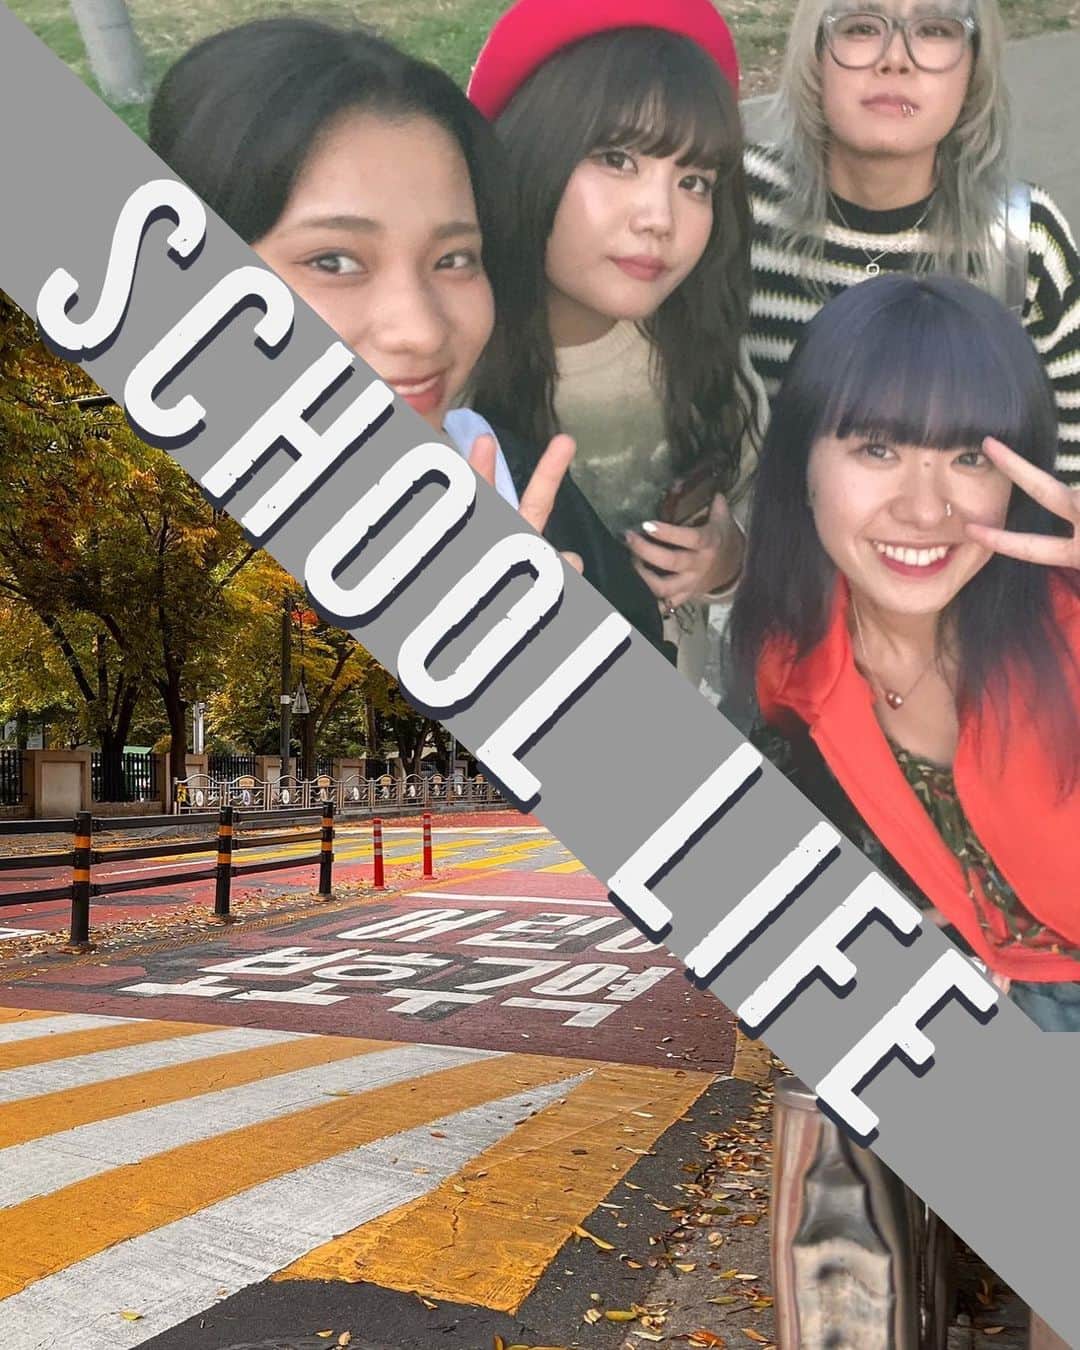 Bmodeのインスタグラム：「-B’mode school life [new]- 『韓国研修レポート』  3泊4日の韓国研修の様子をお届けします💨  学生達の関心が高い韓国美容💓現地で活躍している日本人メイクアップアーティストの講習会に参加したり、韓国の街並みを活かした作品撮影課題に取り組んだりと充実した3泊4日でした✨  美容の視野が広がった良い機会。 自身の今後の目標や美容への興味関心にプラスになっている事でしょう☺️  学生達が街中で撮影した作品は後日公開予定🔥 皆さん、お楽しみに！  ----オープンキャンパス予約受付中----  #美容学校 #美容専門学校 #沖縄美容学校 #ビーモード #ビューティーモードカレッジ #bmode  #沖縄 #美容師 #エステ #ヘアメイク #ネイル #マツエク #メイク #専門学生　#美容学生 #沖縄美容 #トータルビューティー科 #美容科」